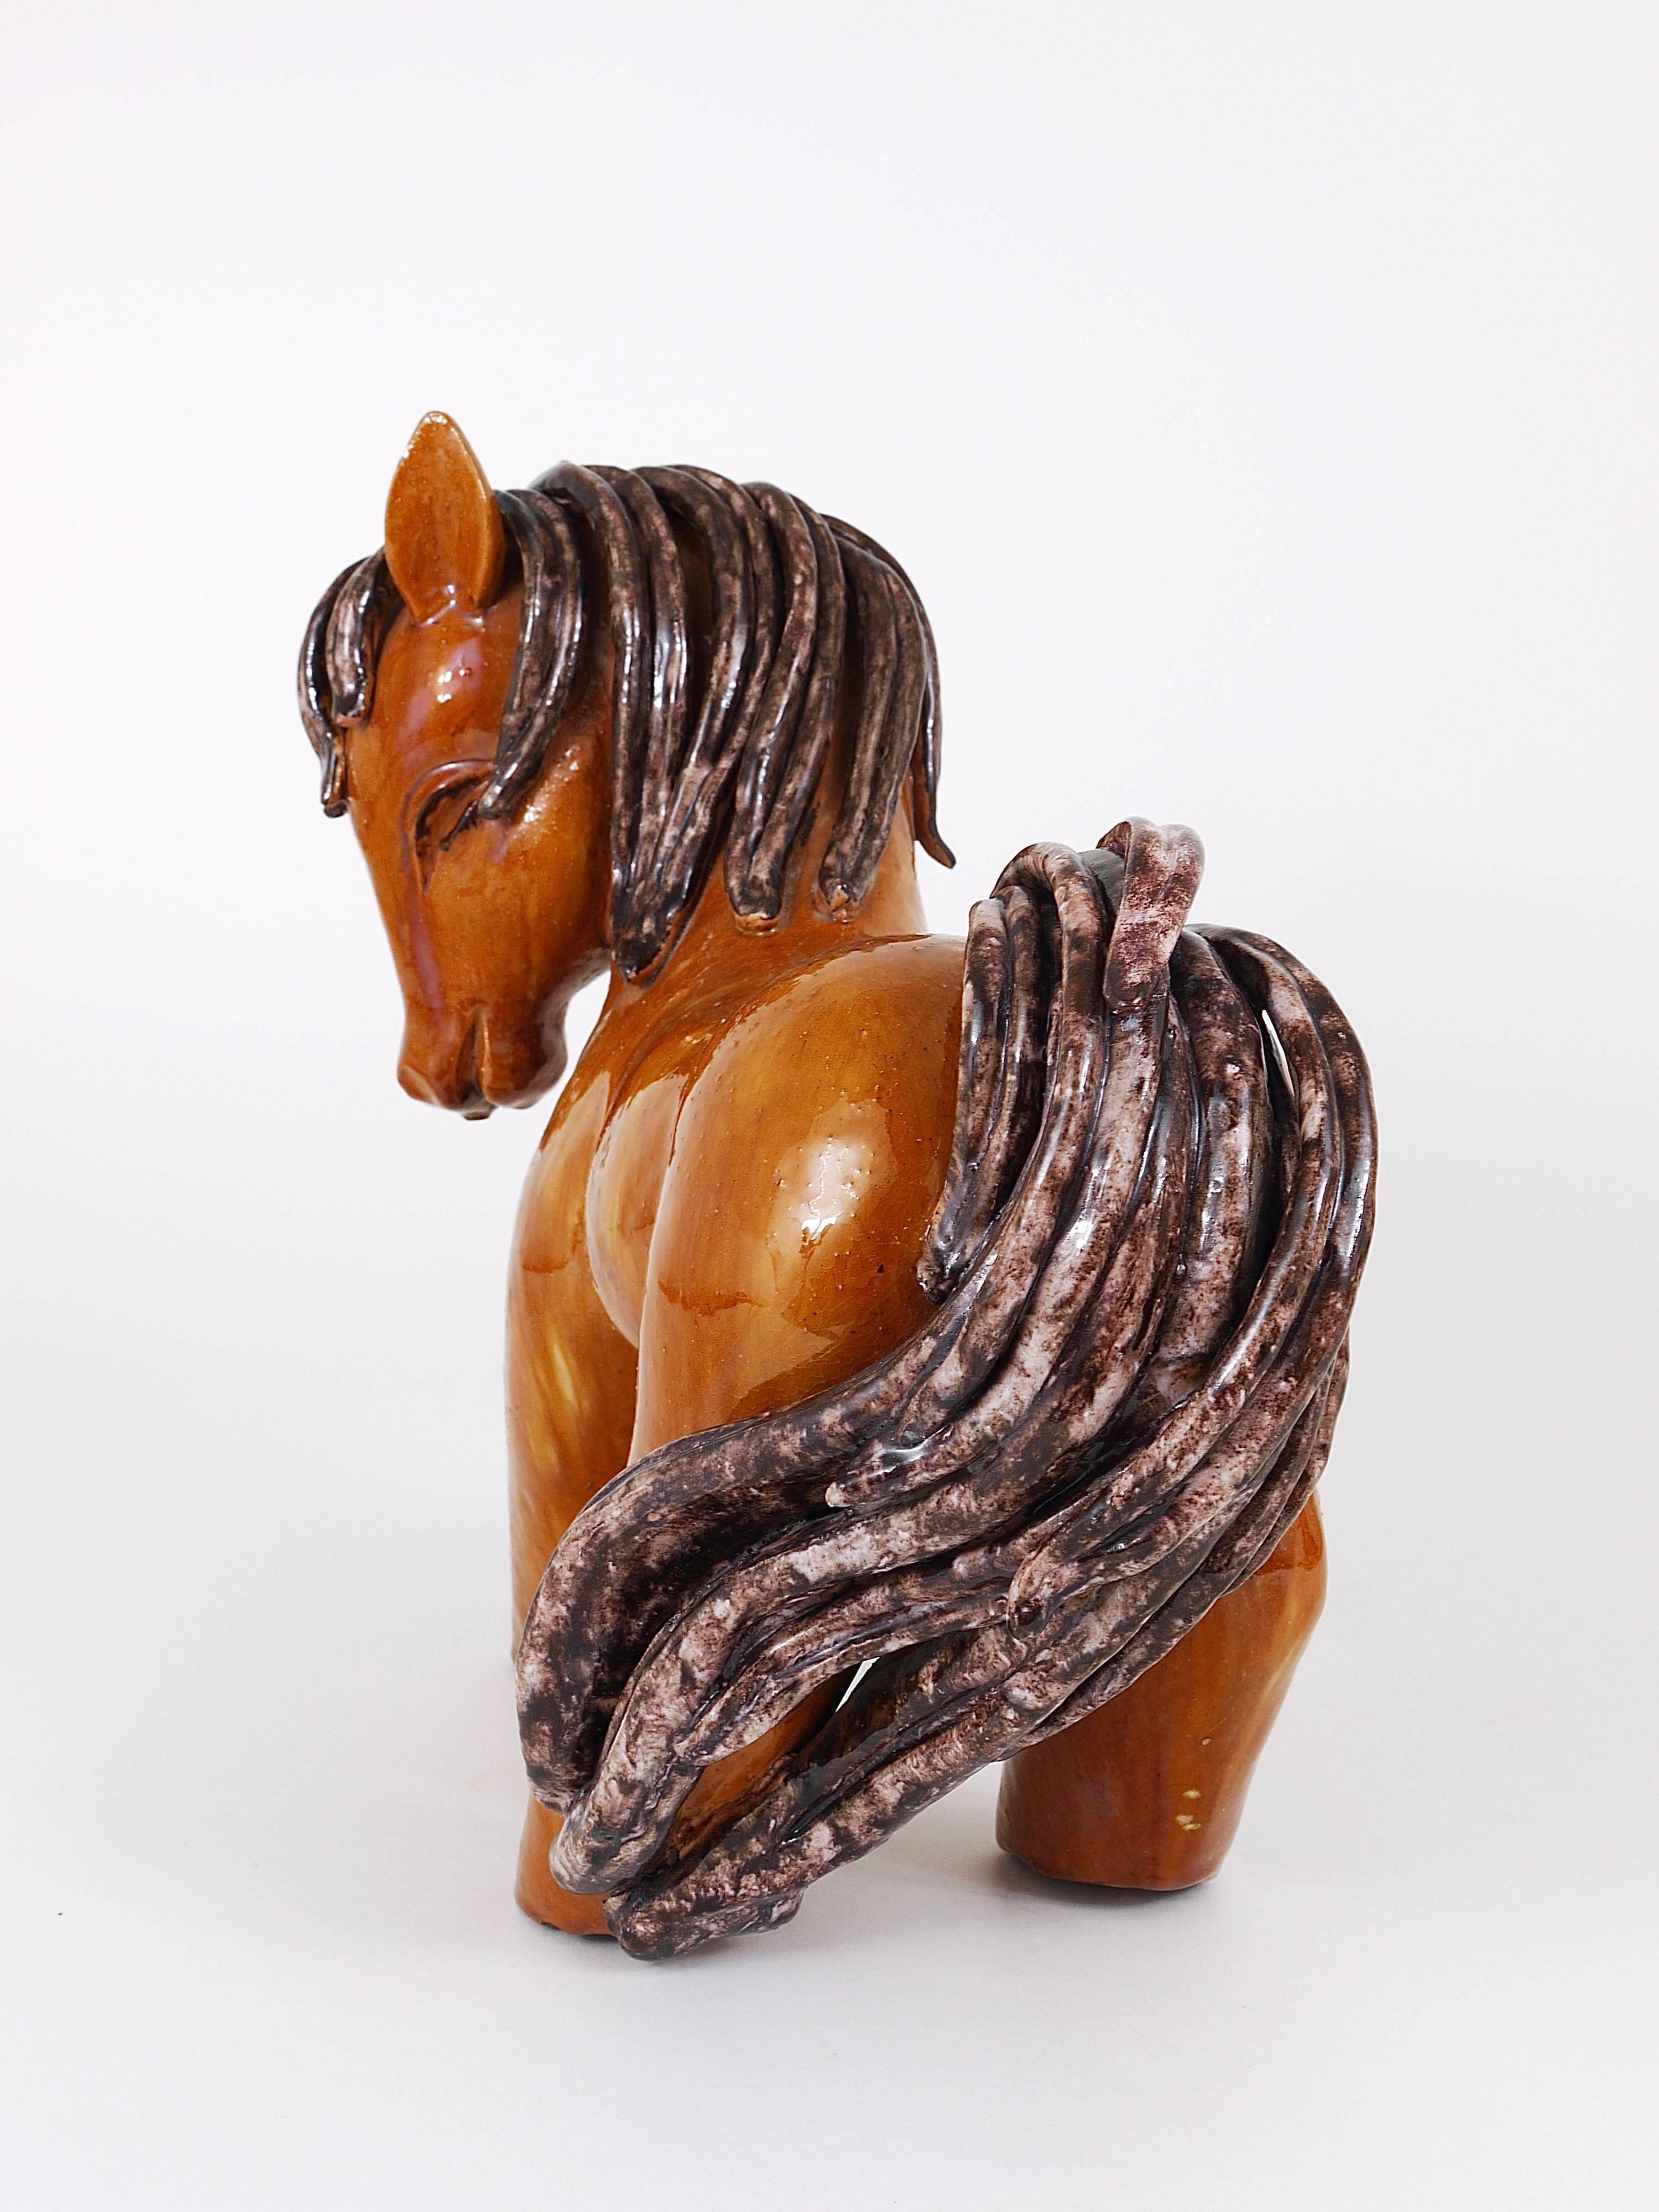 Huge Walter Bosse Pottery Ceramic Horse Sculpture, Austria, 1950s For Sale 1